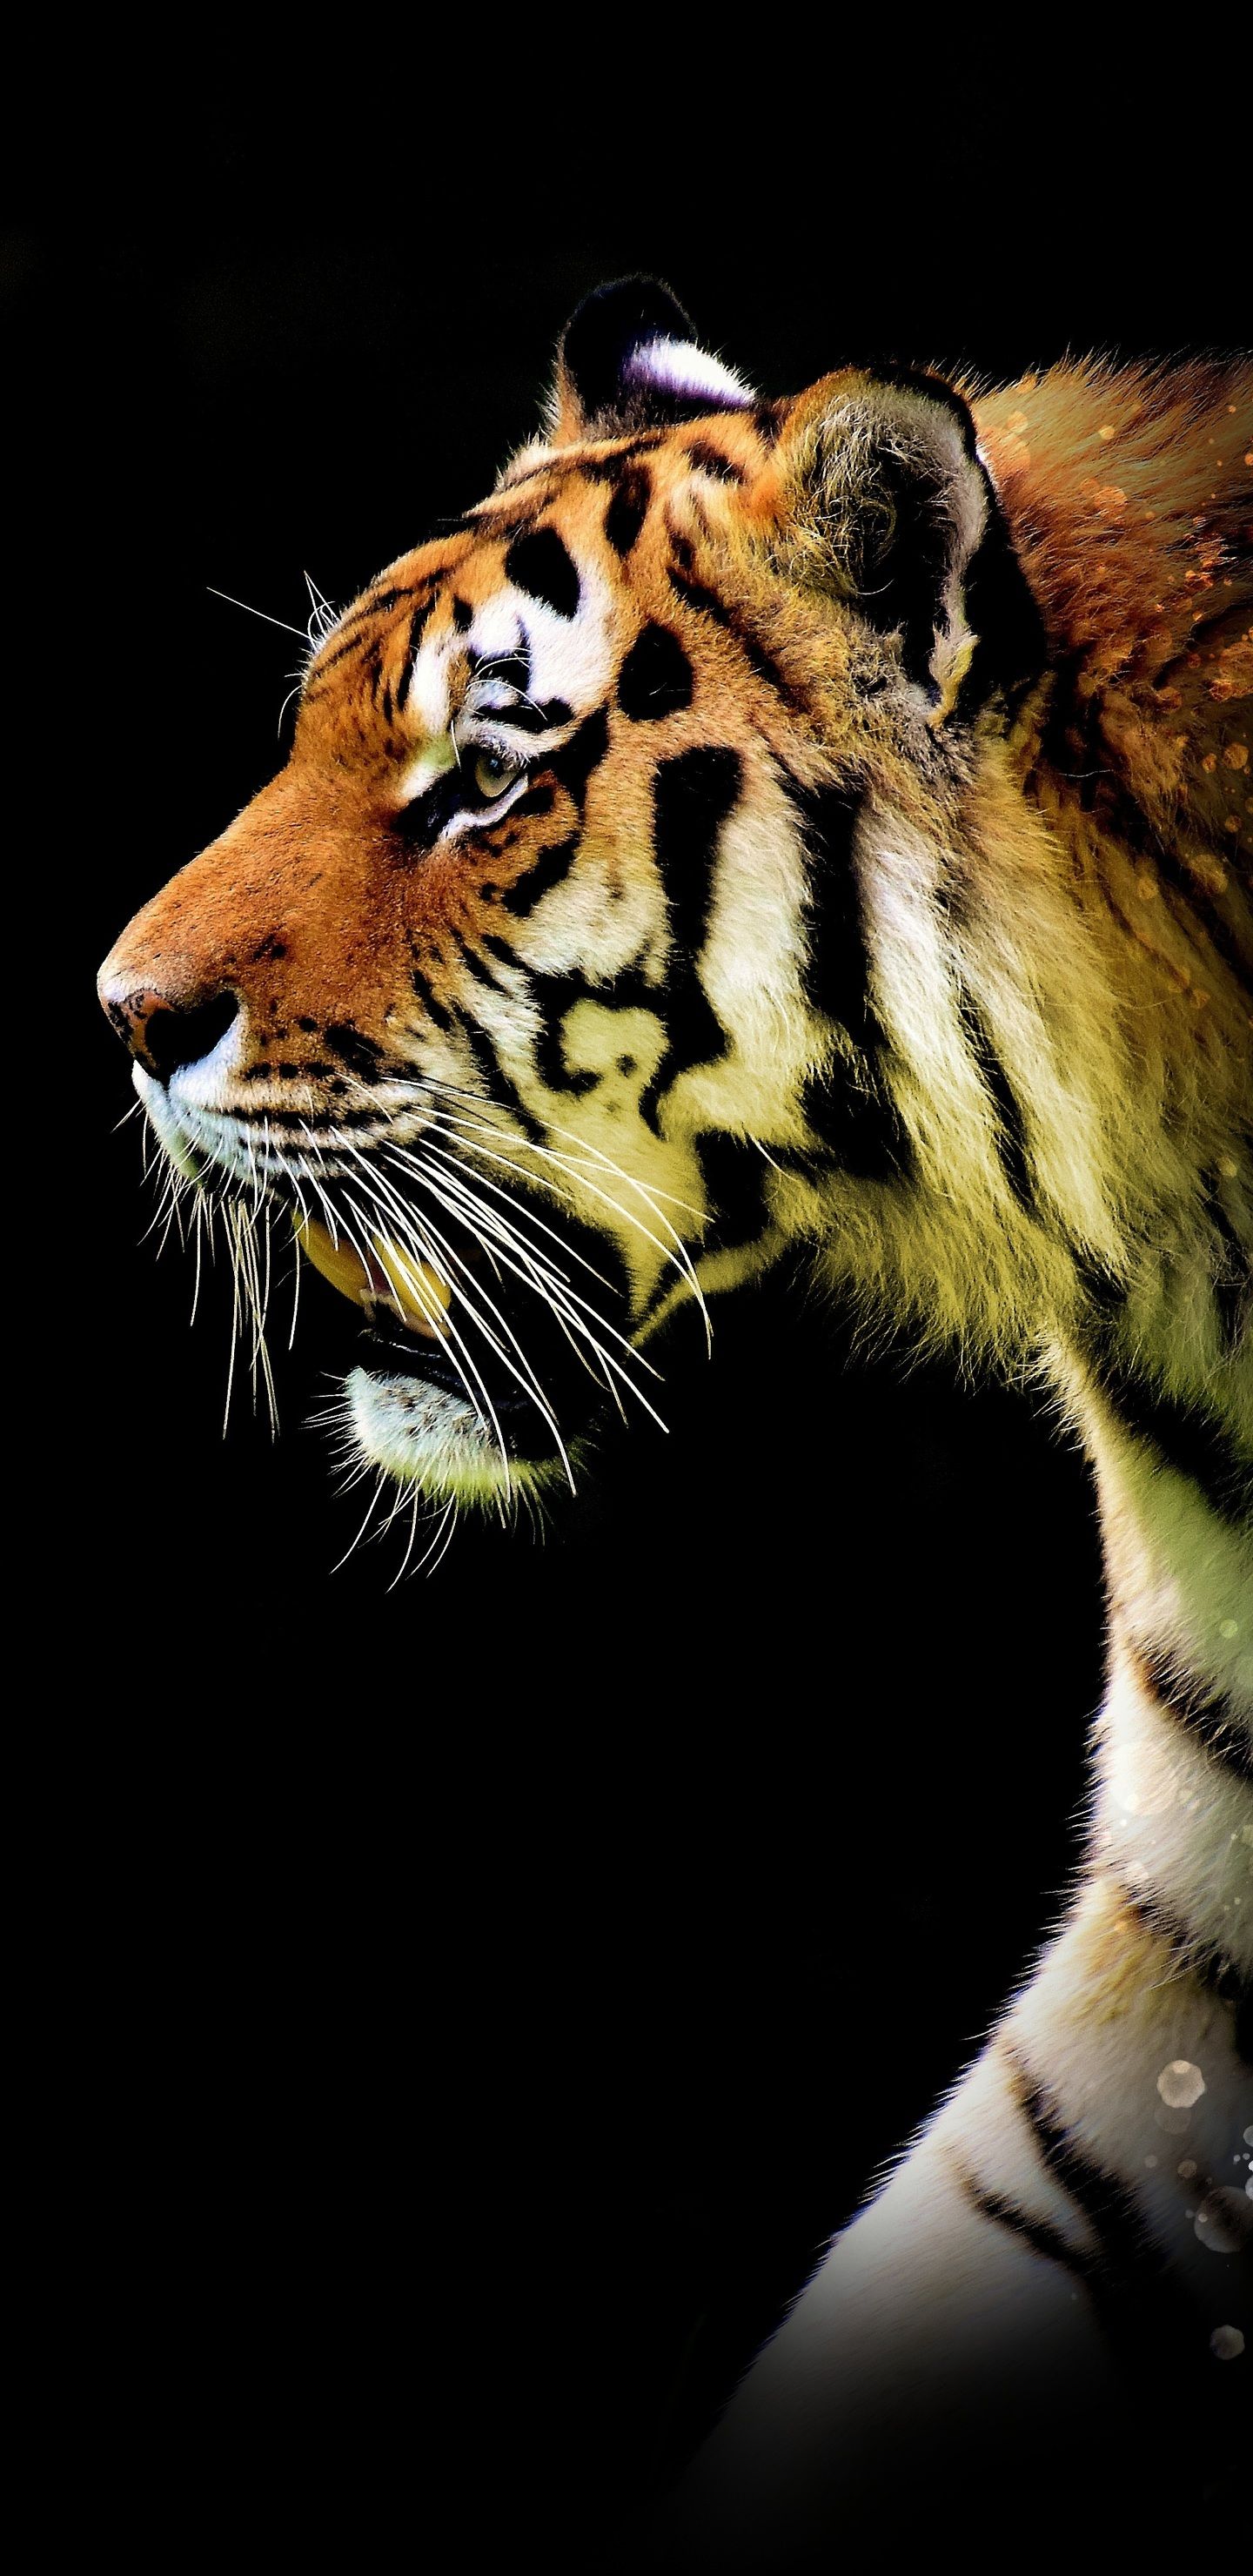 35+] Tiger Backgrounds - WallpaperSafari